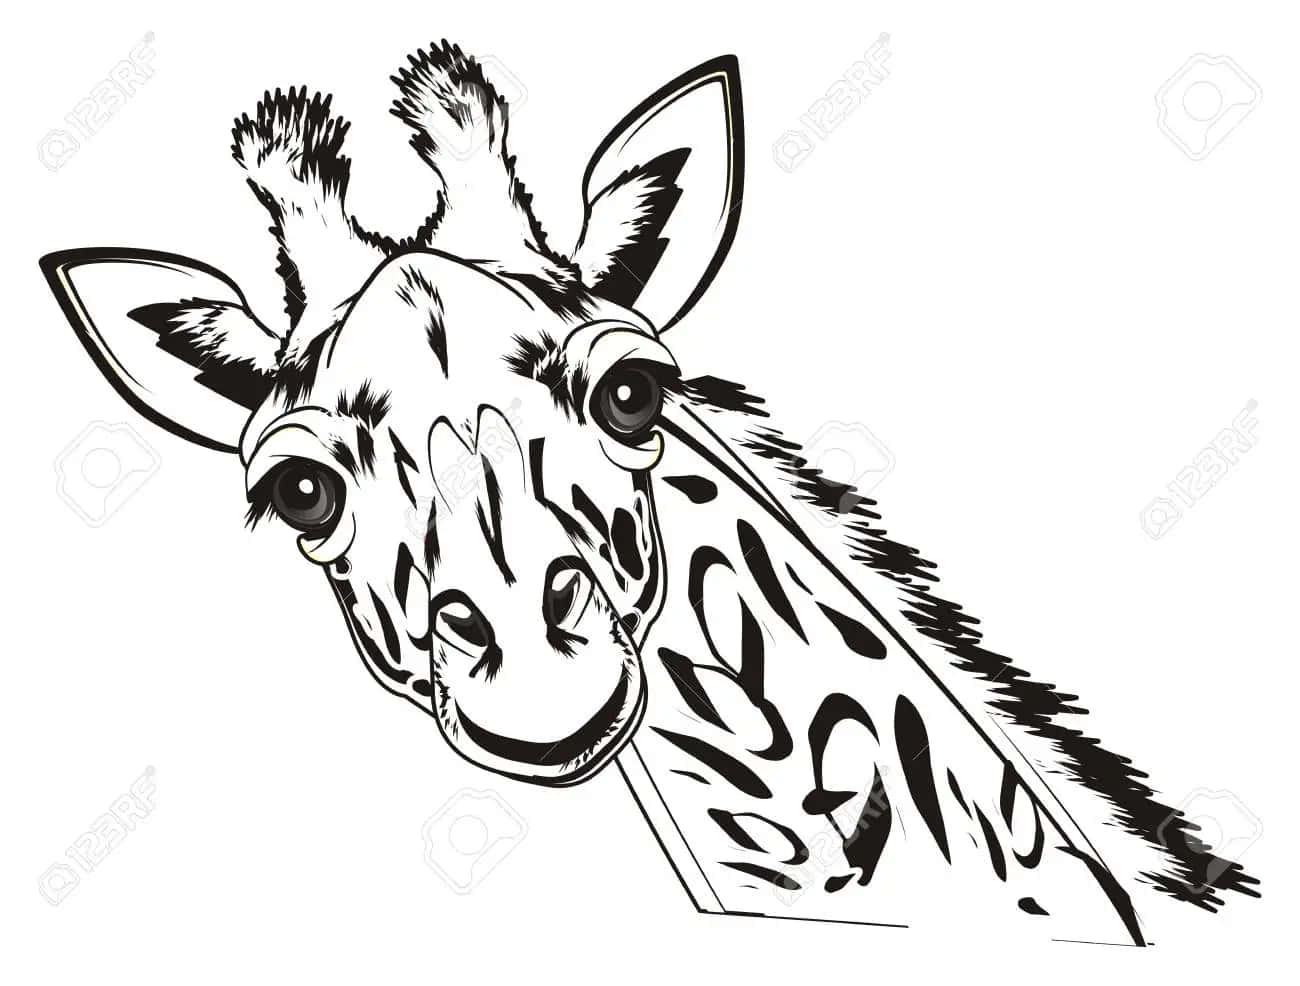 Imagemdigital Engraçada De Uma Girafa Desenhada.